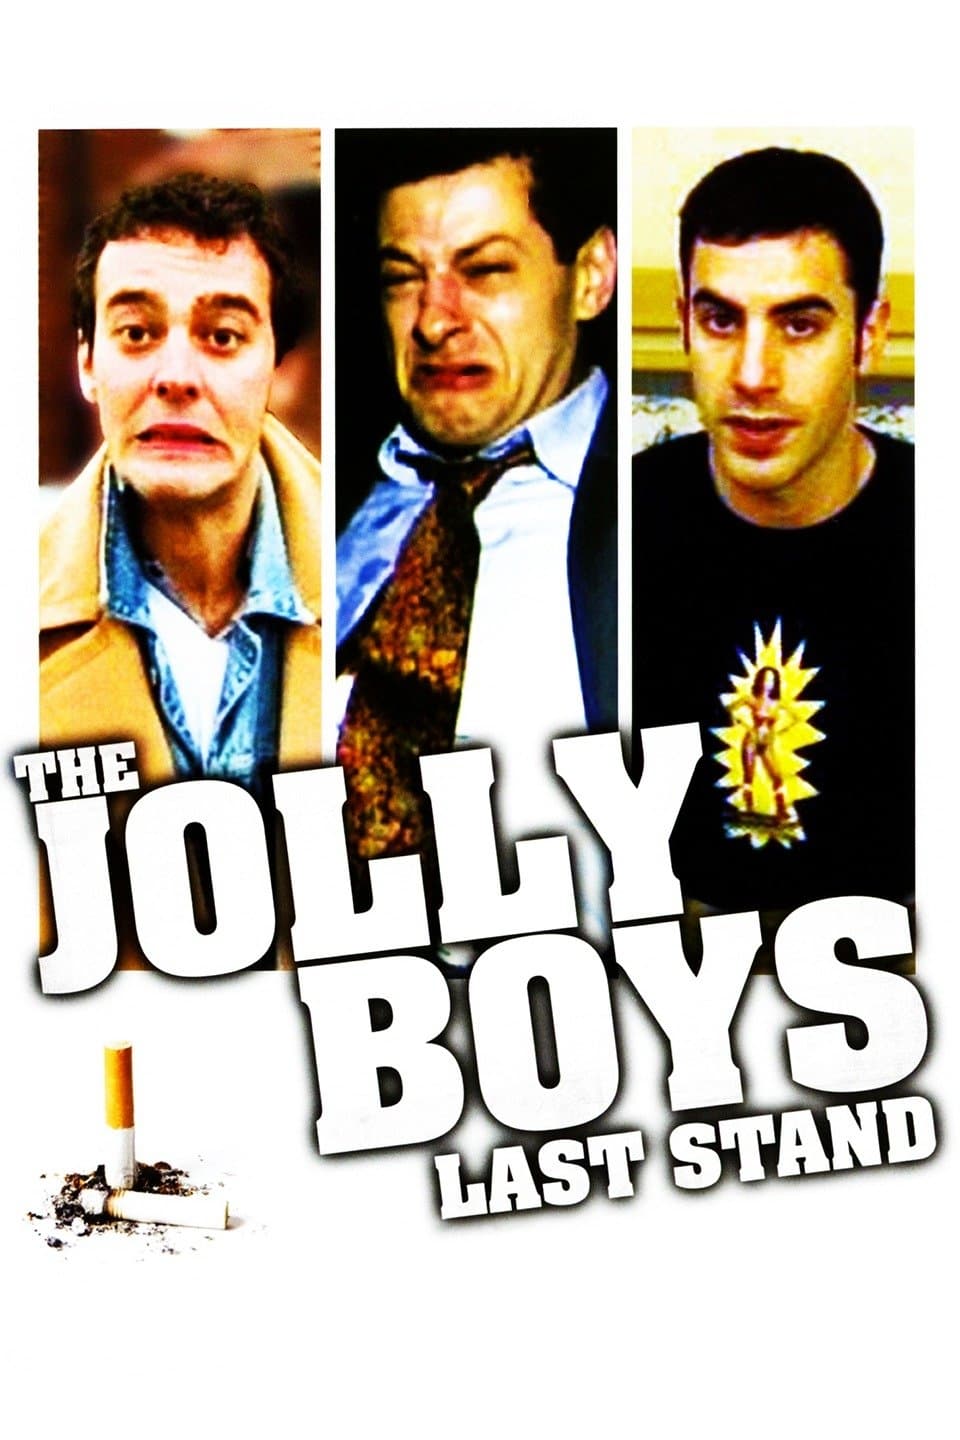 Plakat von "The Jolly Boys' Last Stand"